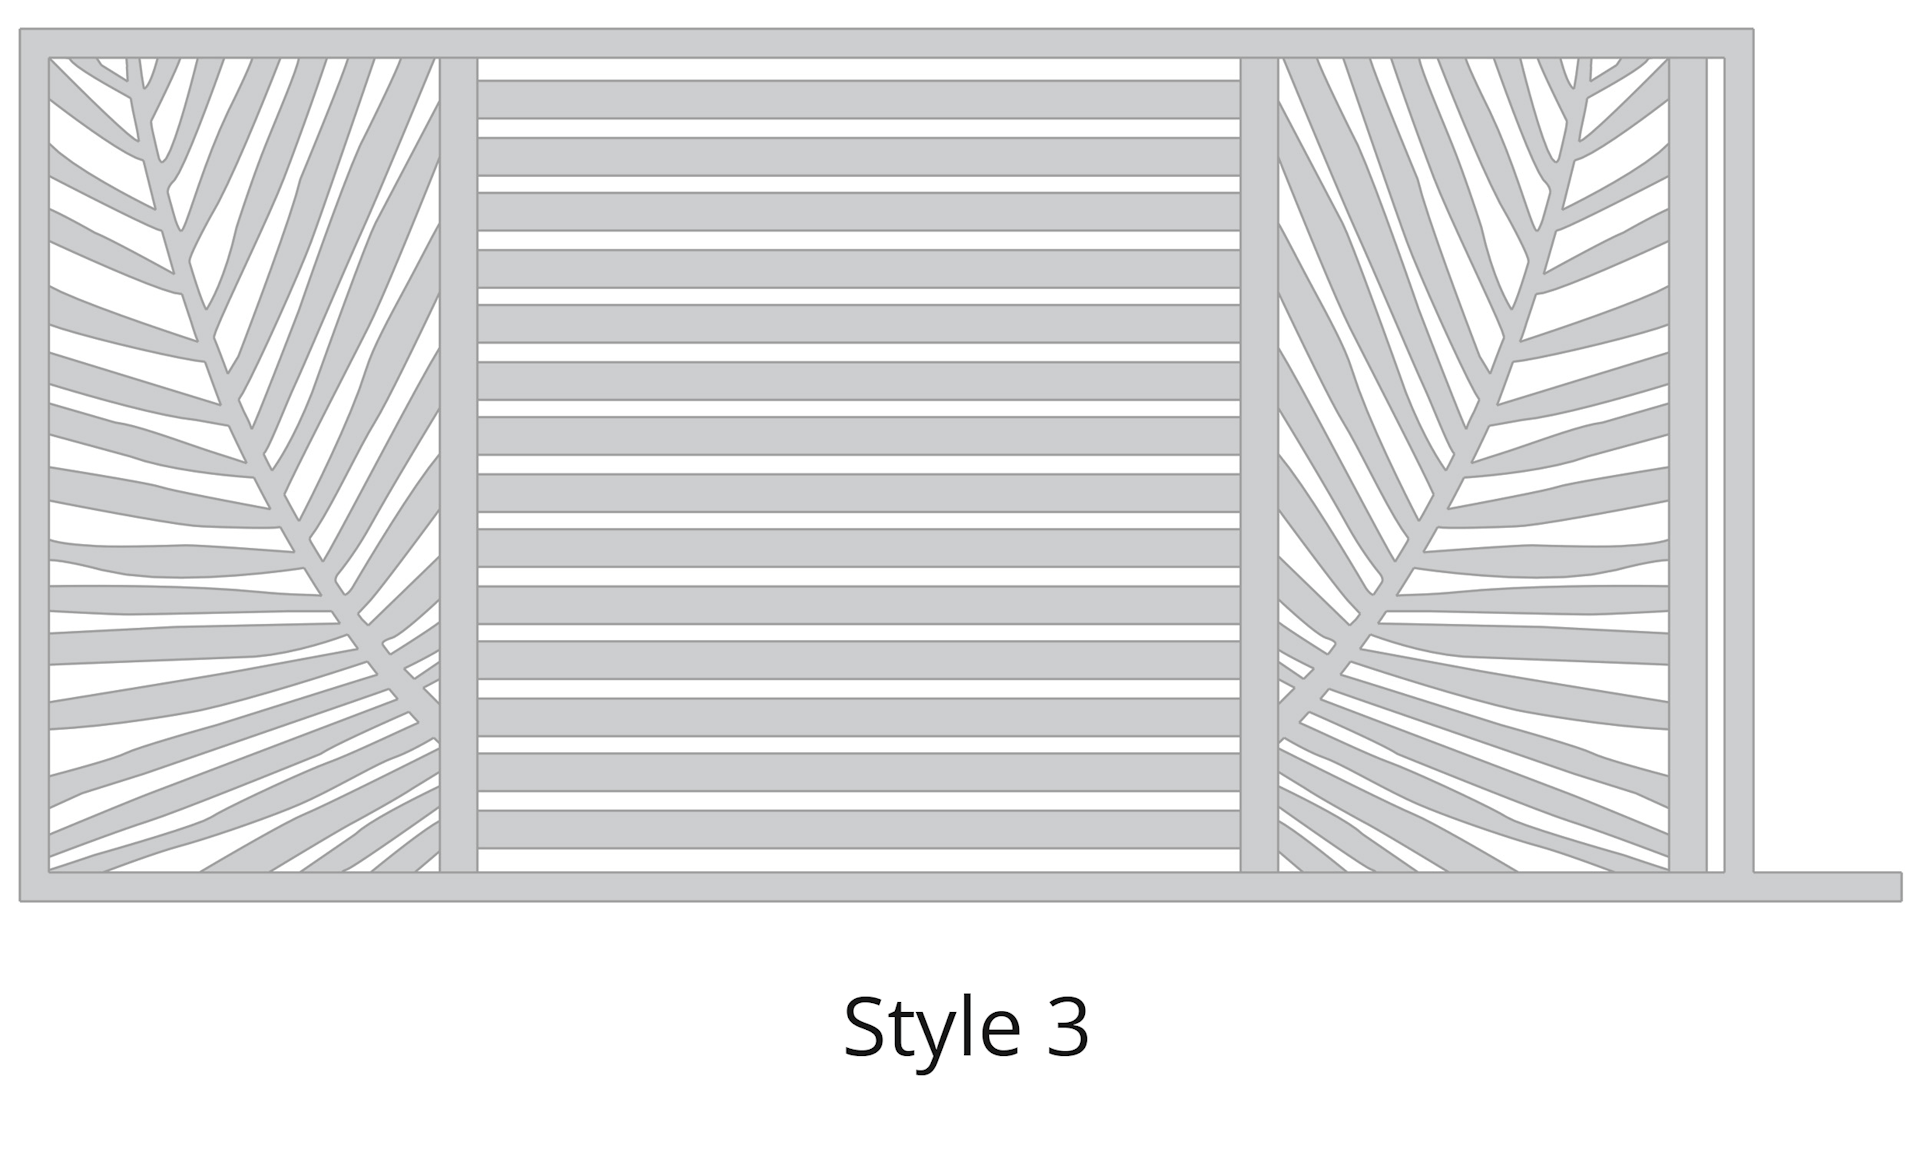 Lazer Cut Gate Design - Style #3